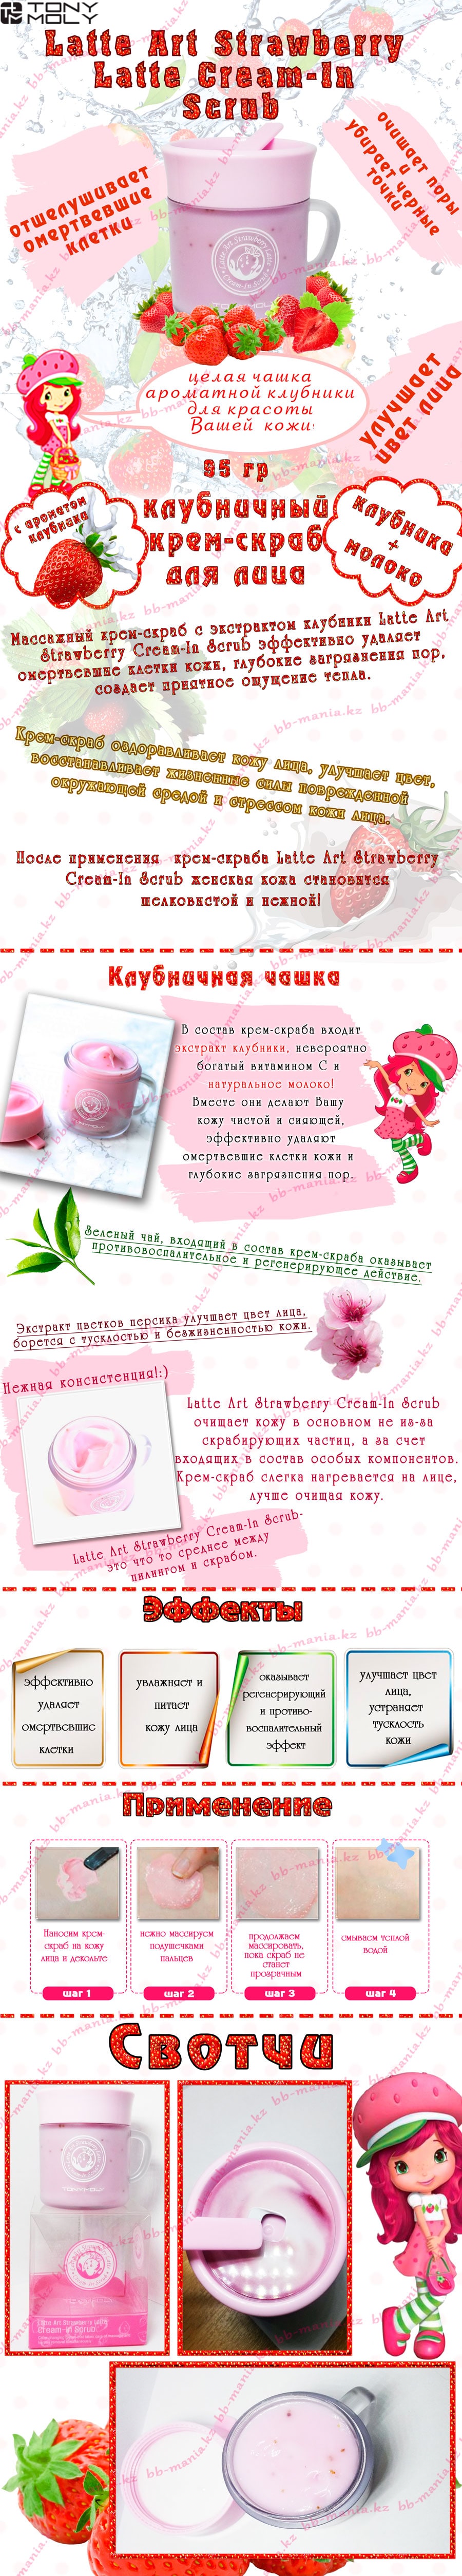 latte-art-strawberry-scrub_ (1)-min